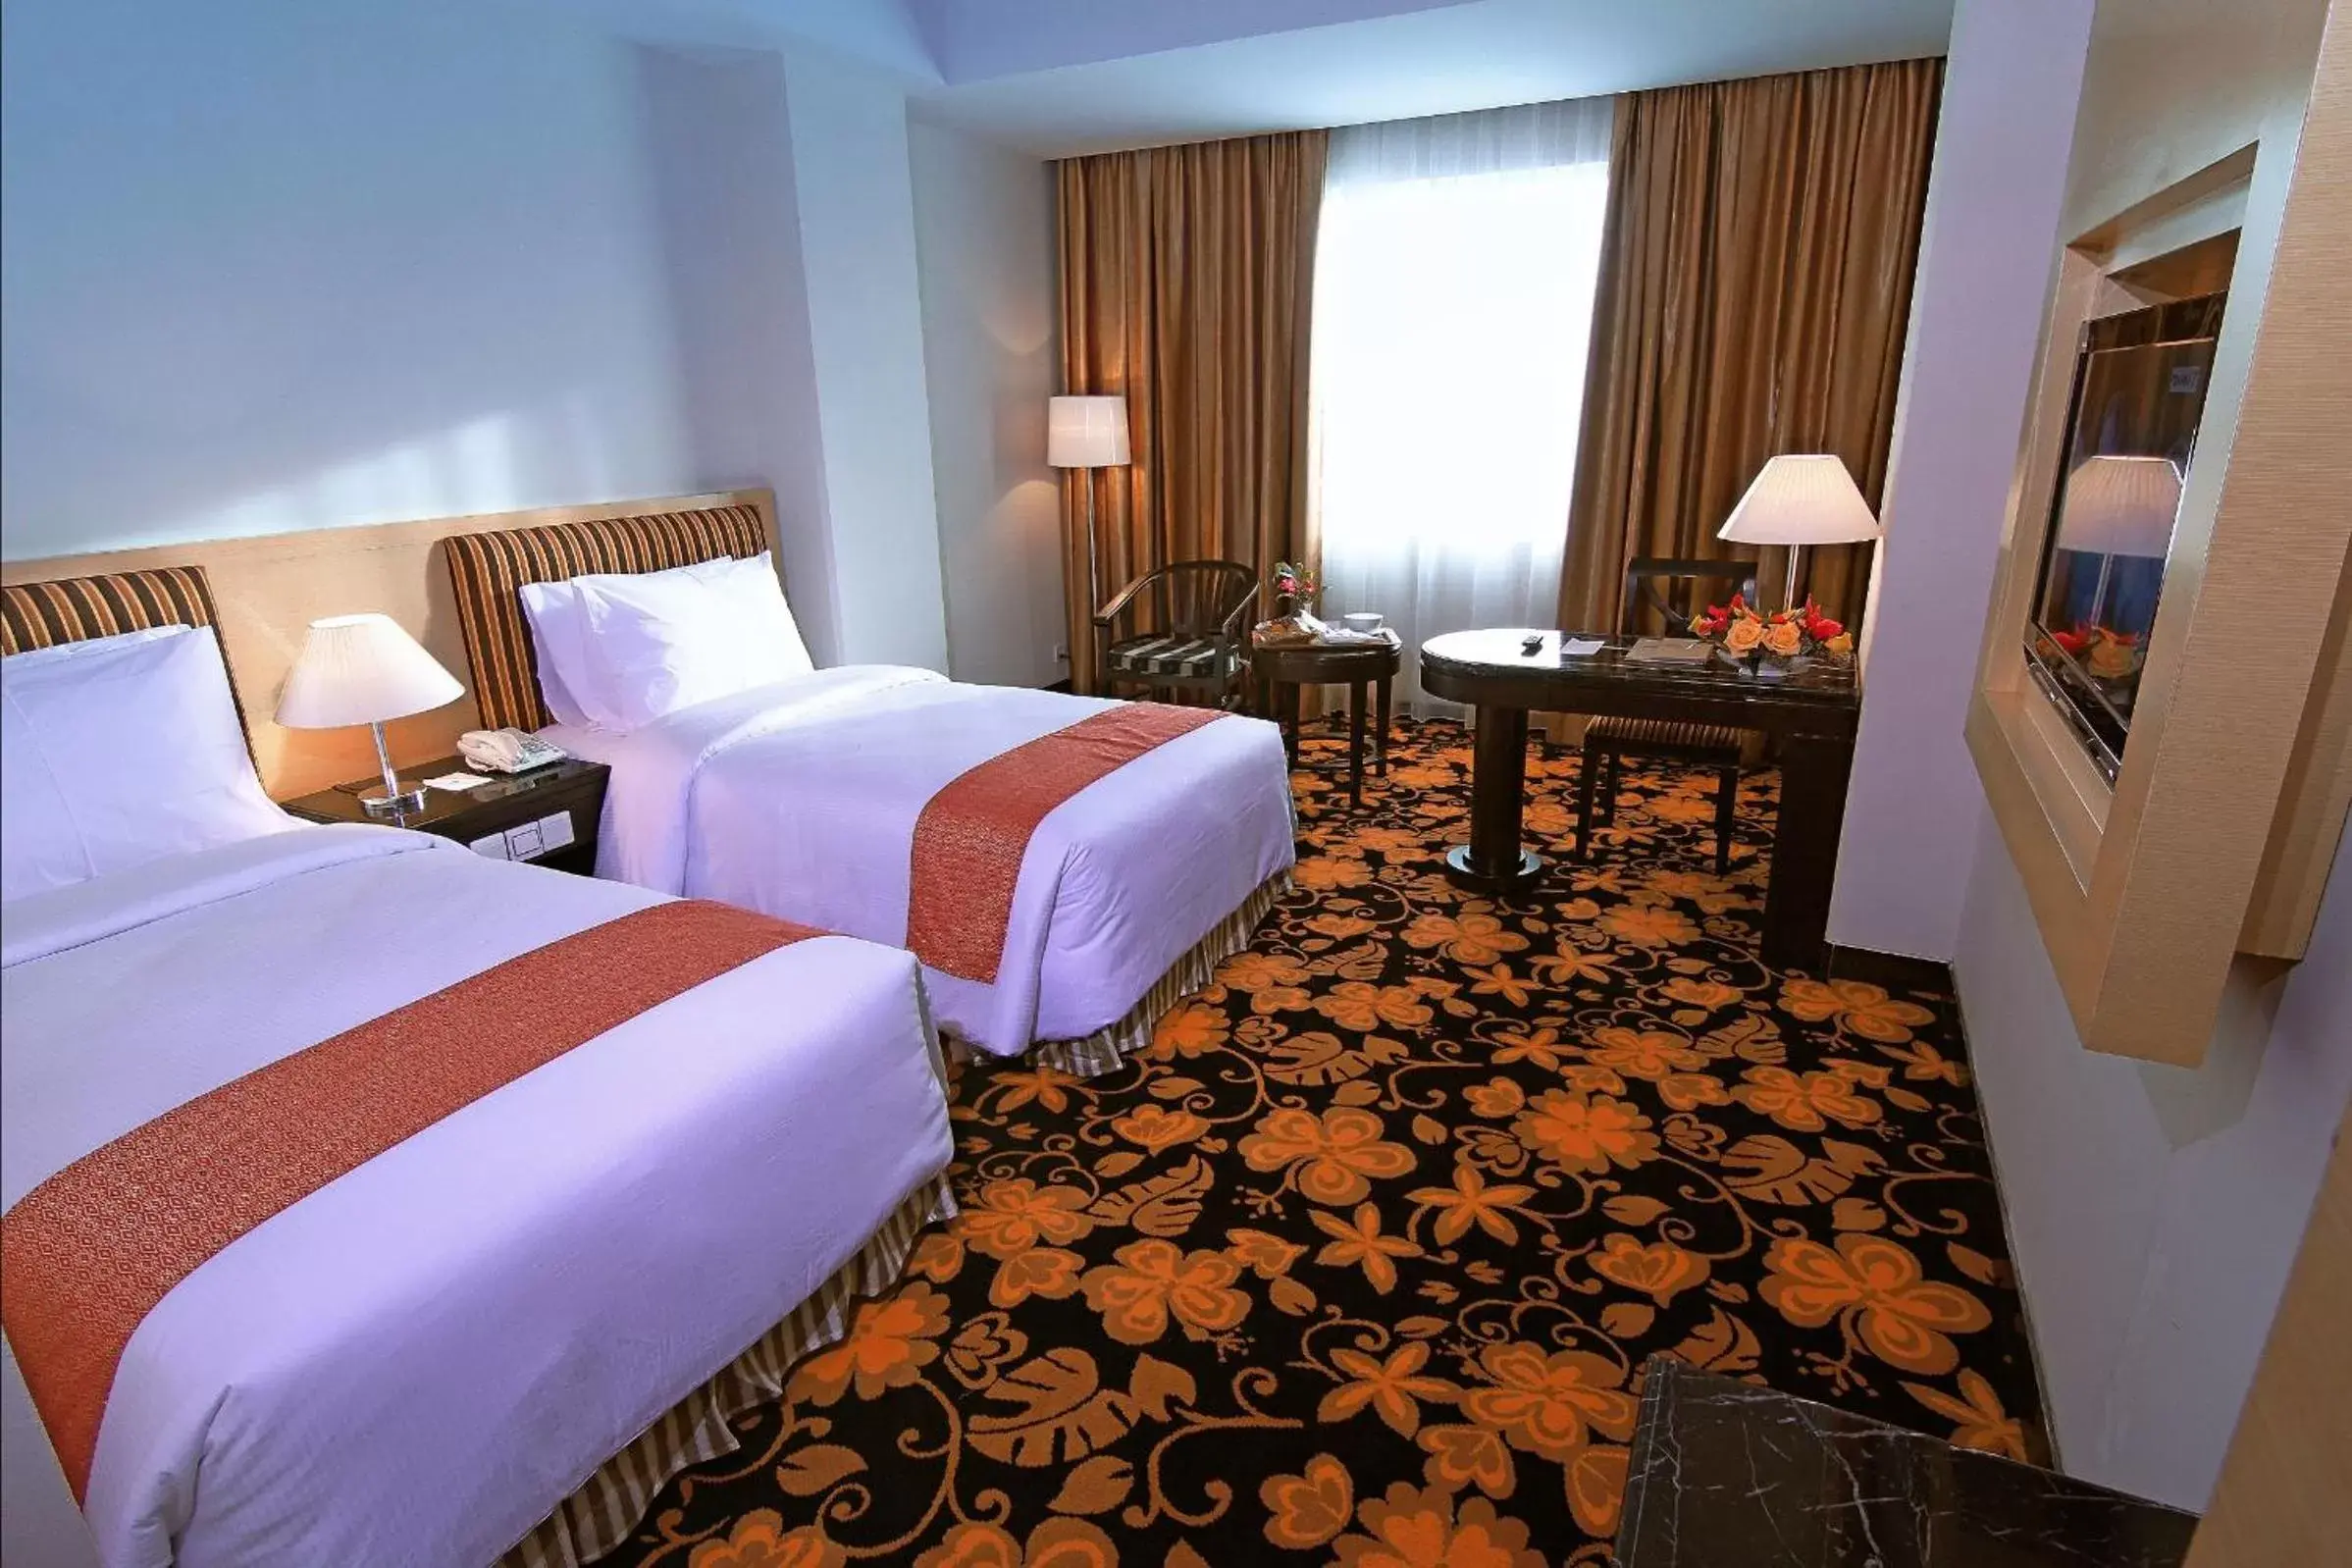 Bedroom, Room Photo in Rocky Plaza Hotel Padang